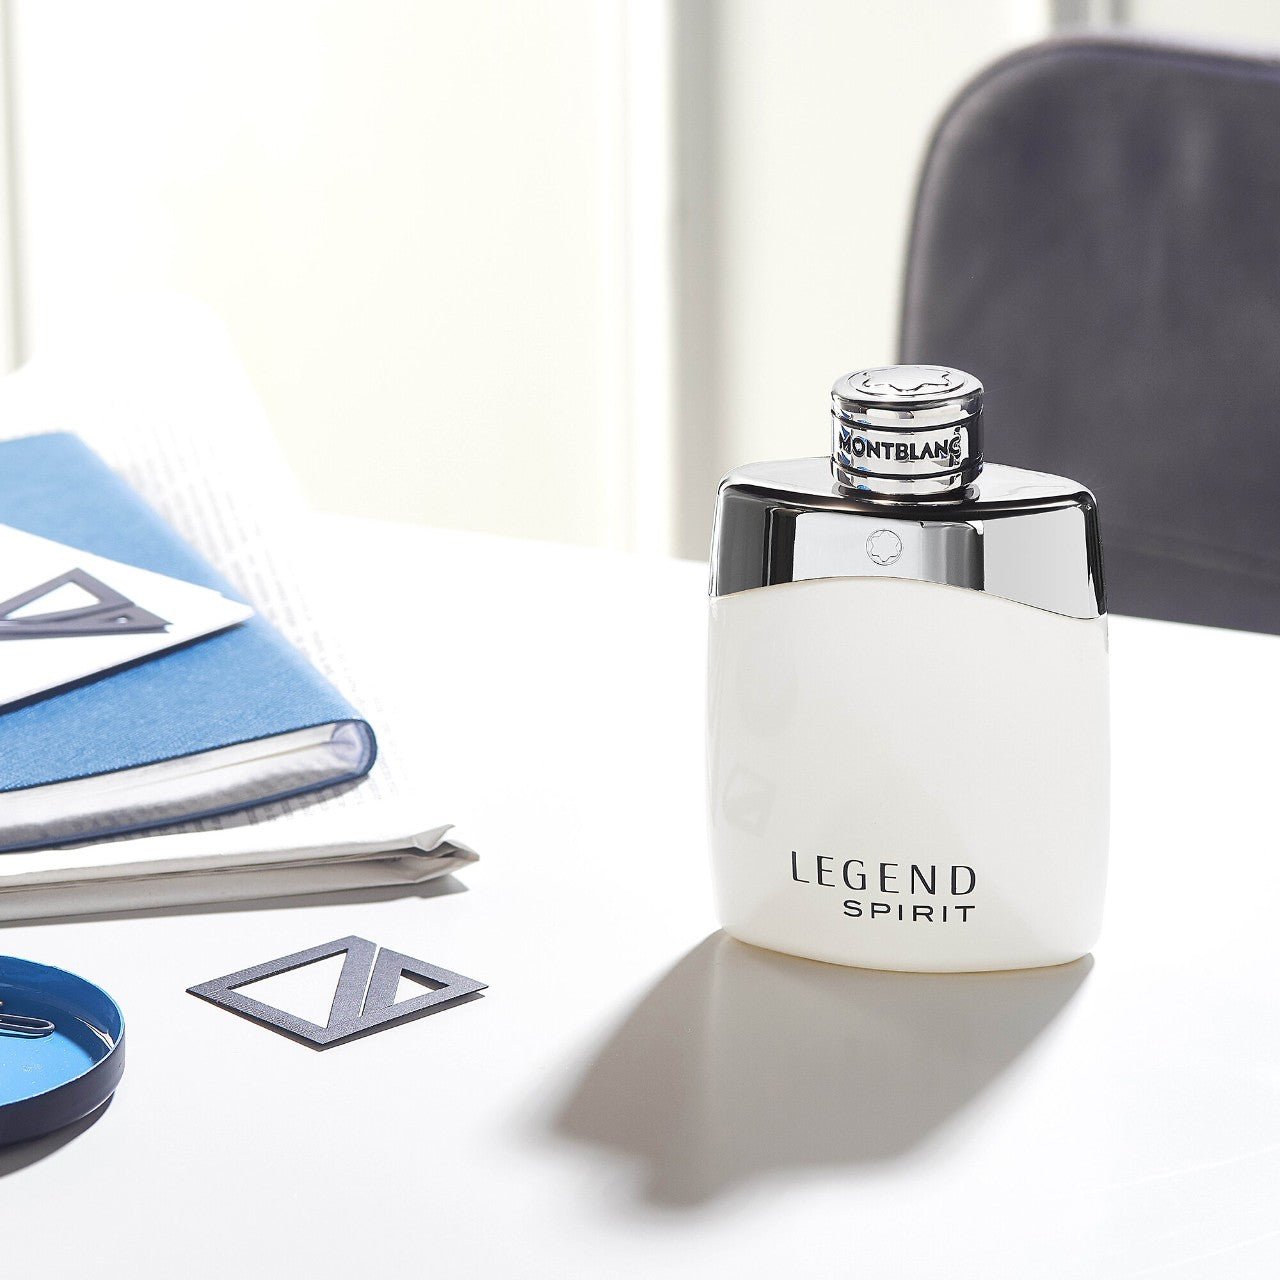 Mont Blanc Legend Spirit EDT | My Perfume Shop Australia